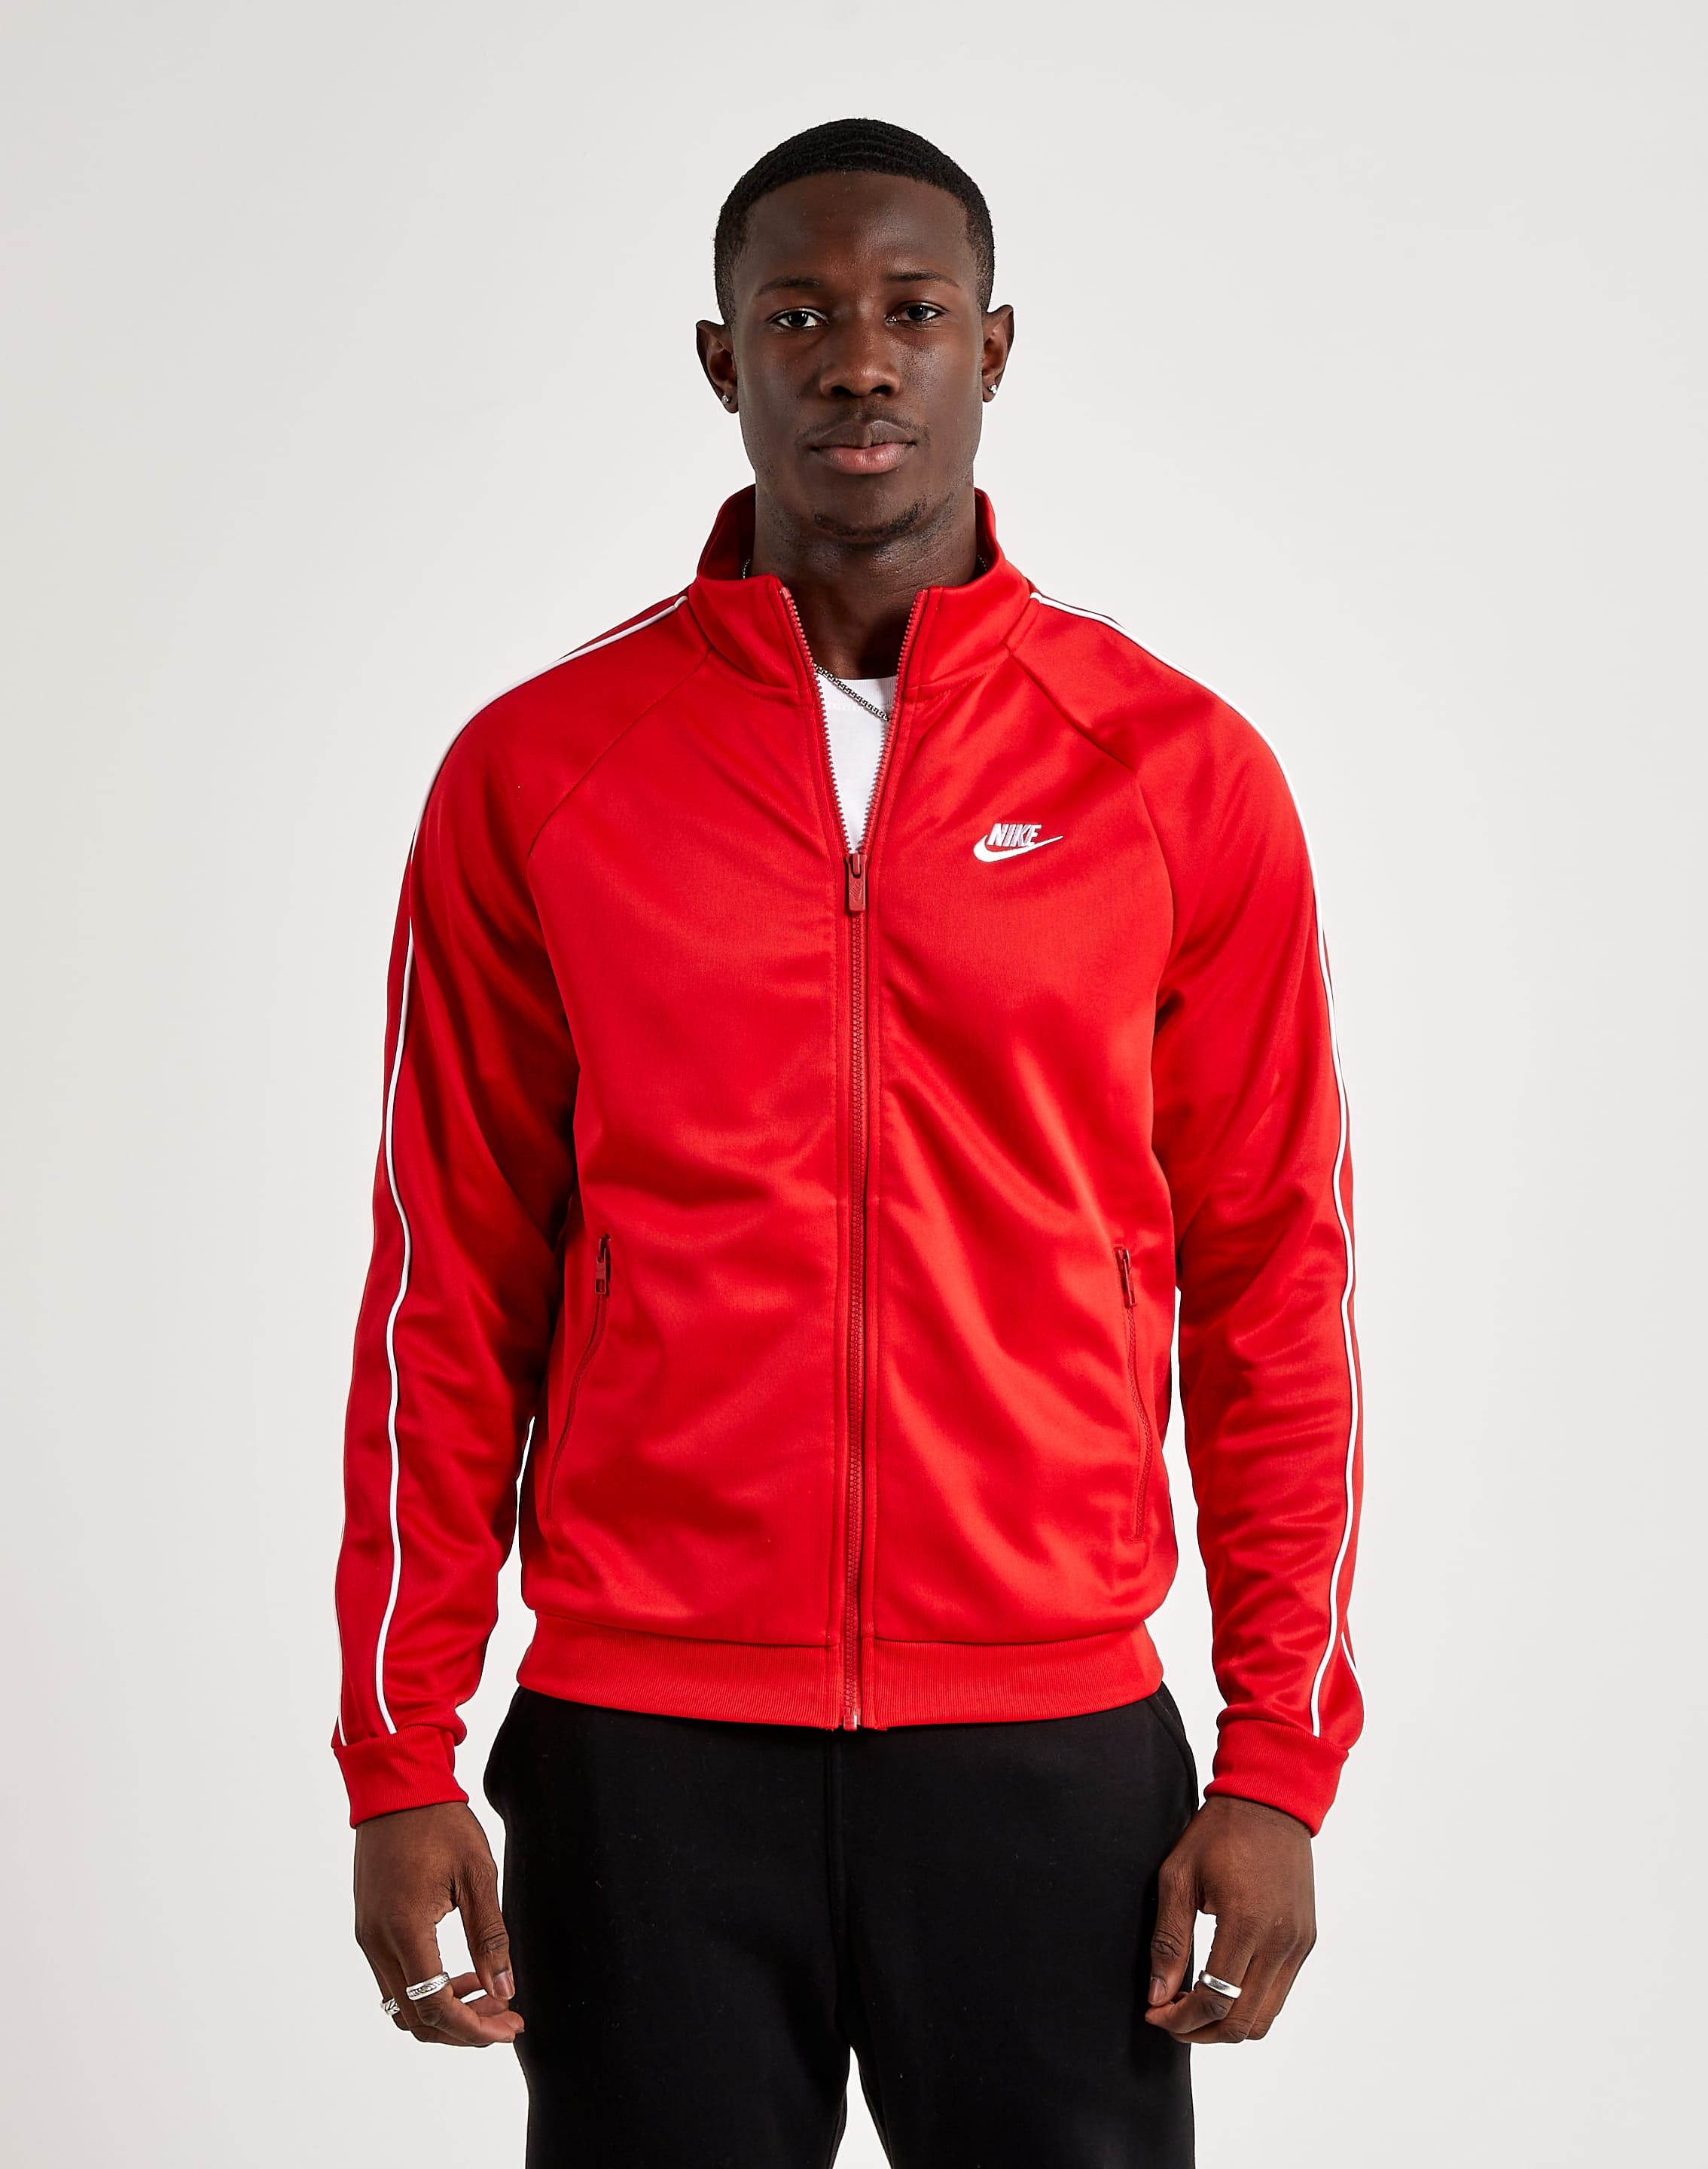 Mens Sportswear Jackets & Vests. Nike.com